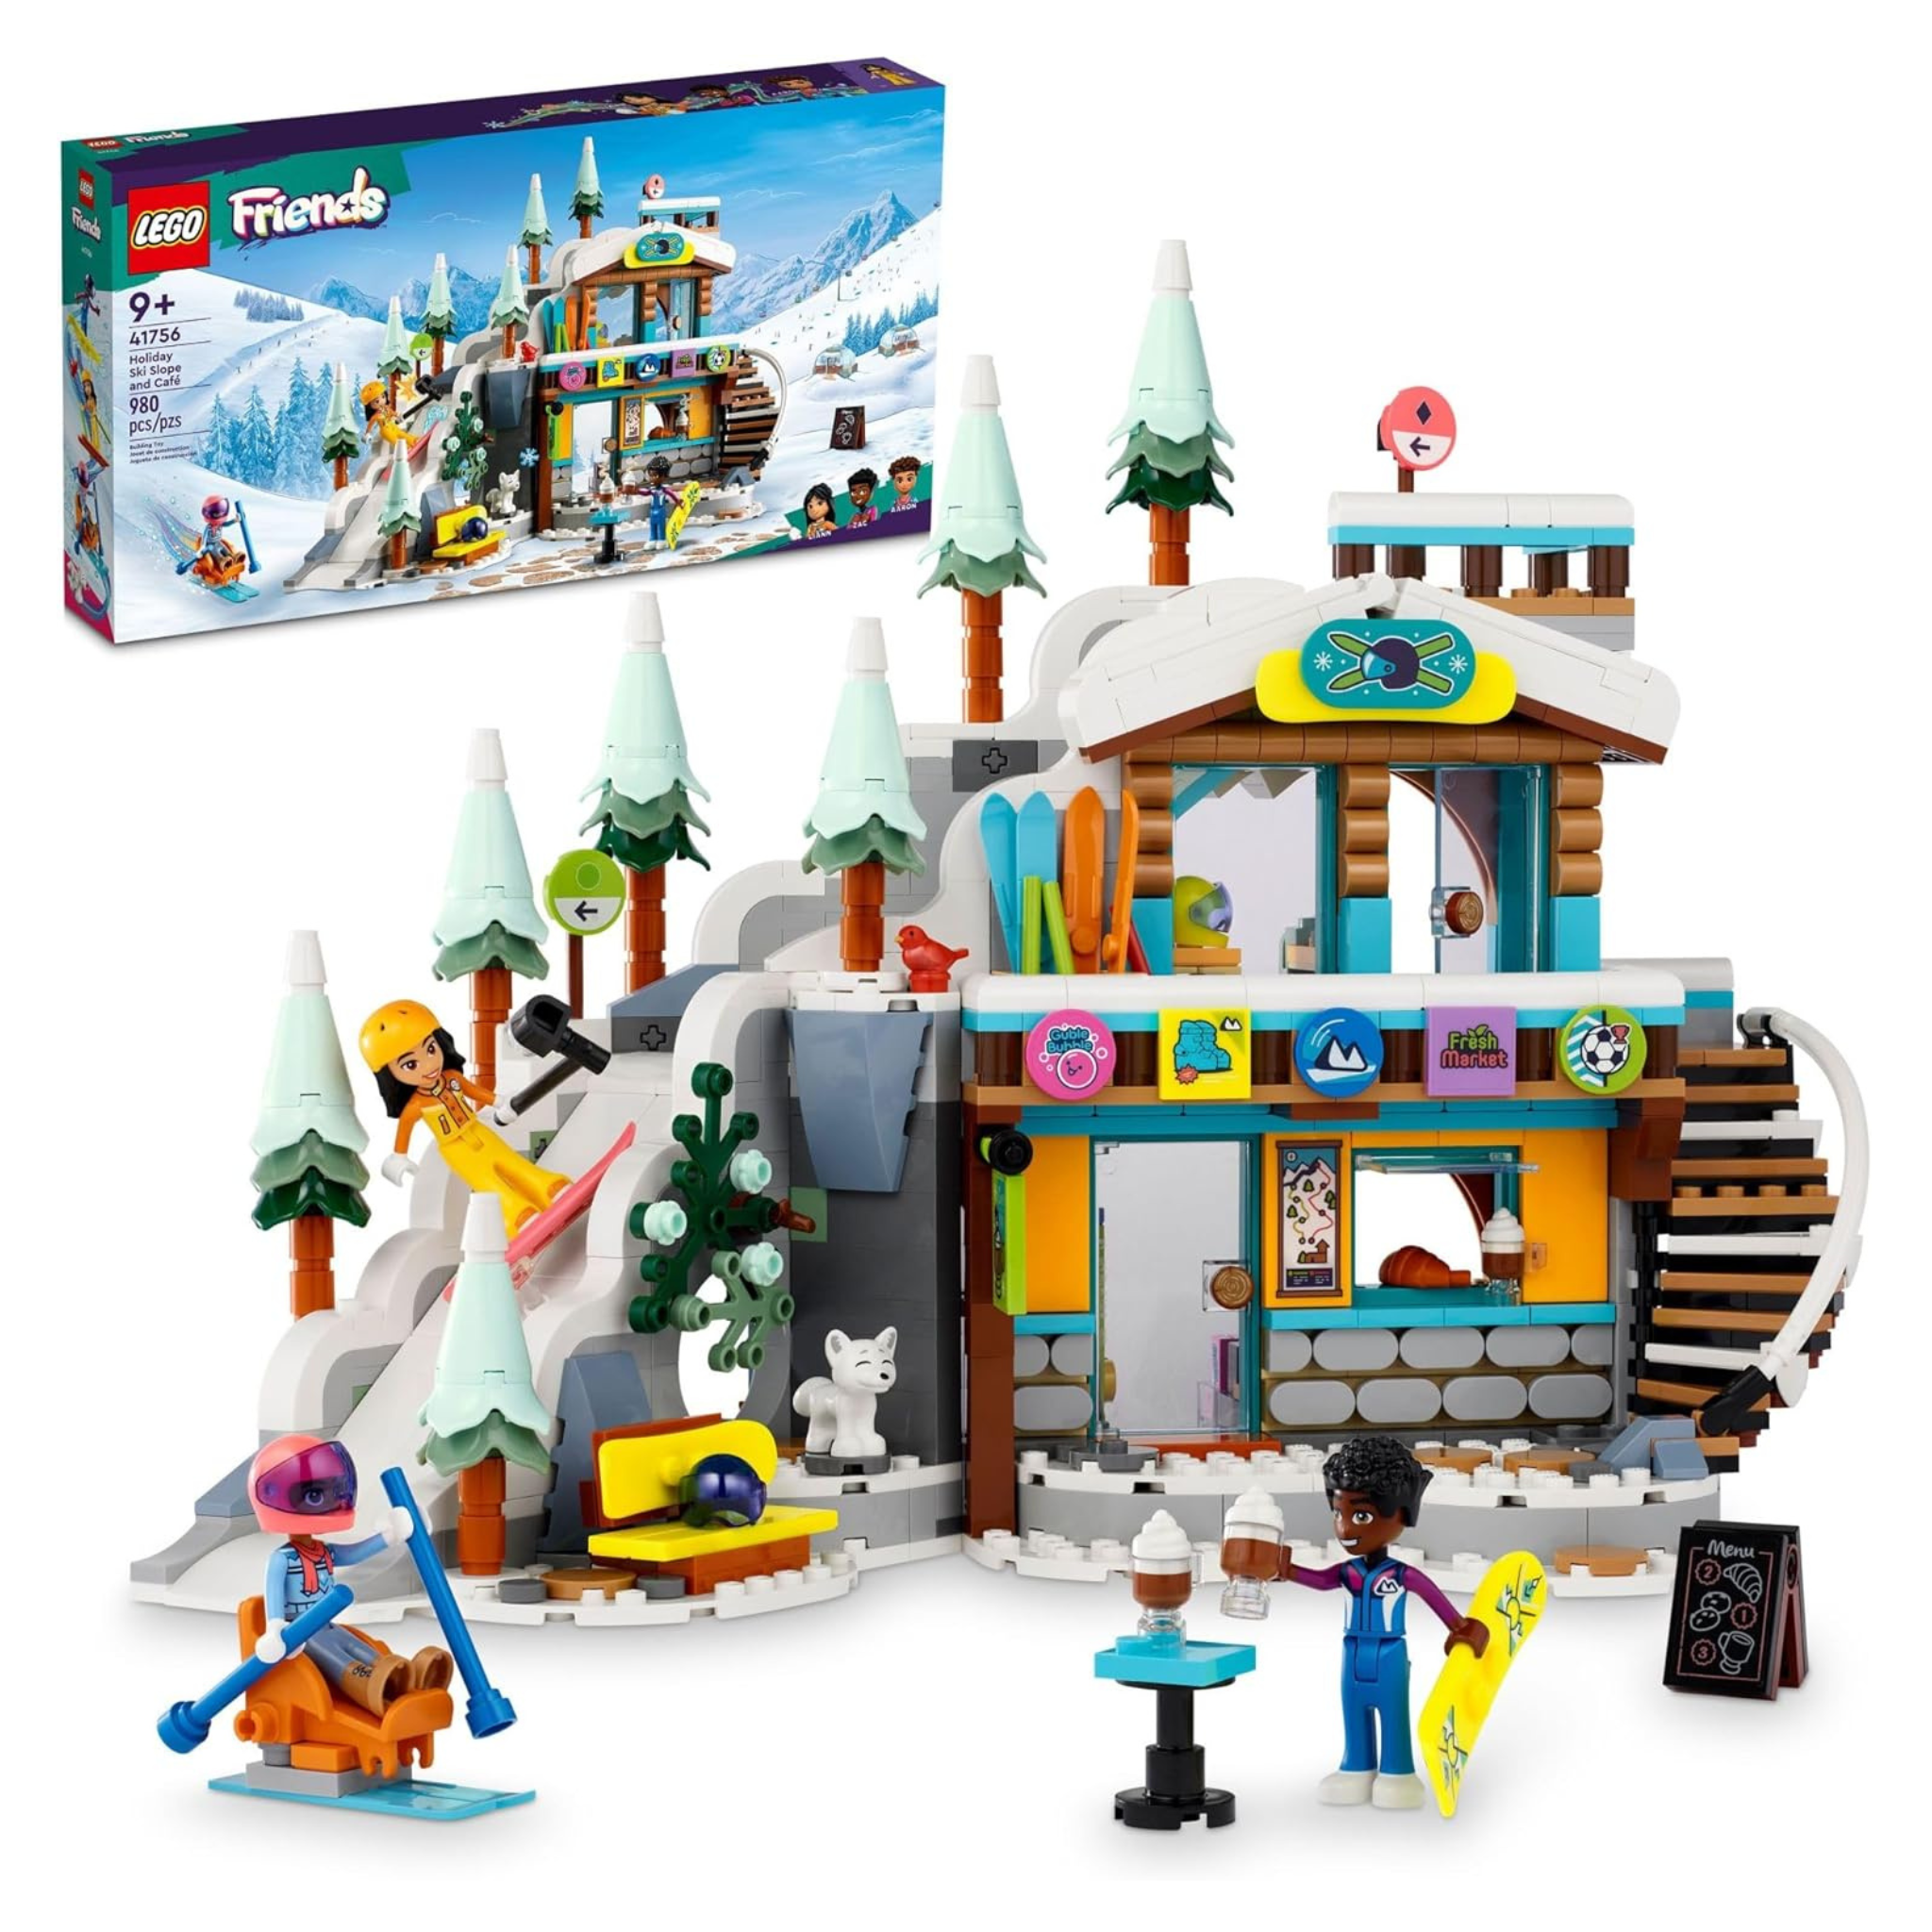 980 Piece LEGO Friends Holiday Ski Slope and Café